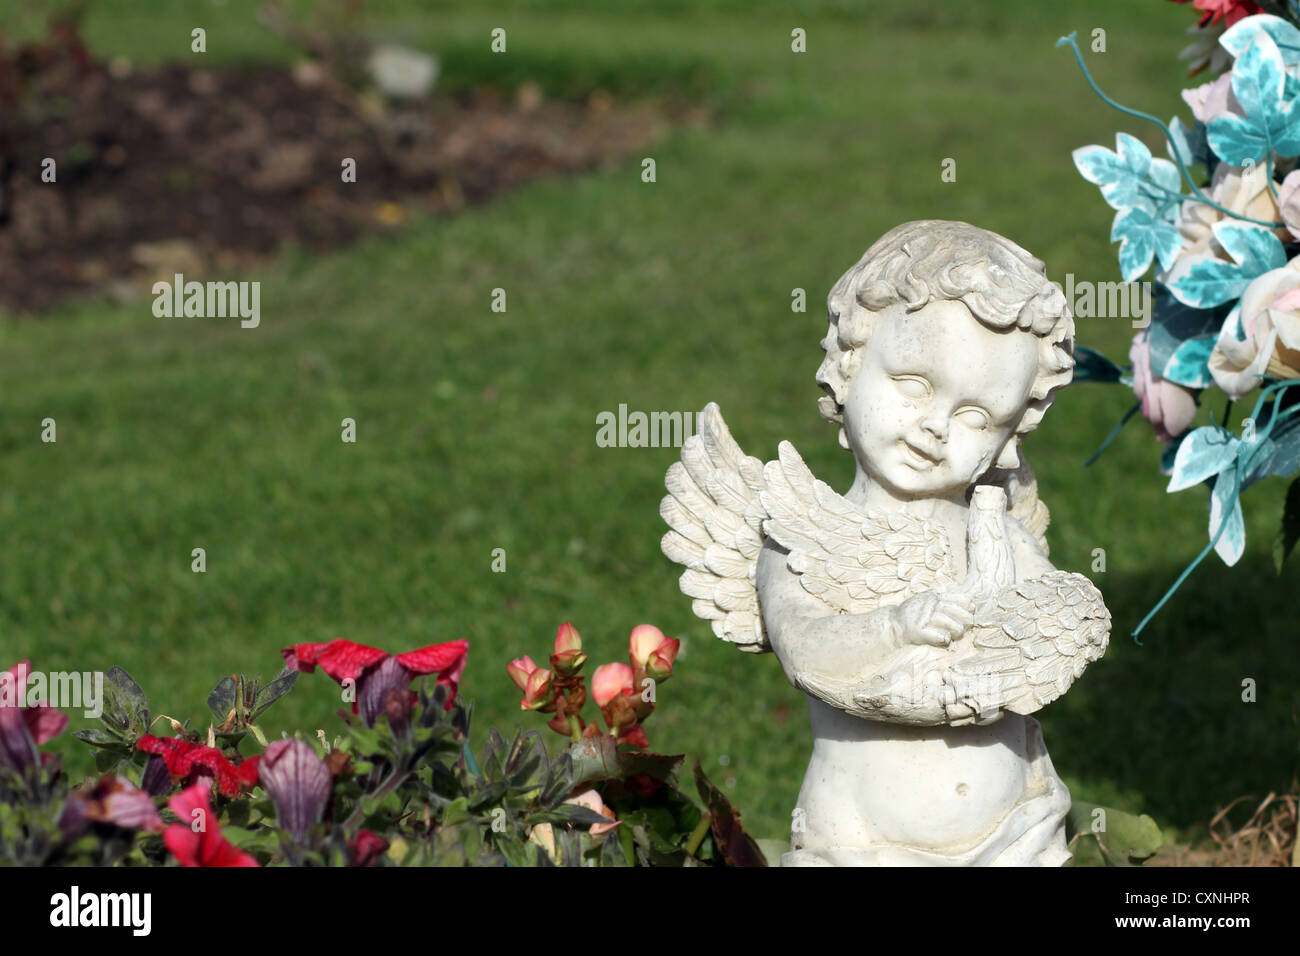 Engel-Denkmal im Friedhof neben blühenden Blumen. Stockfoto